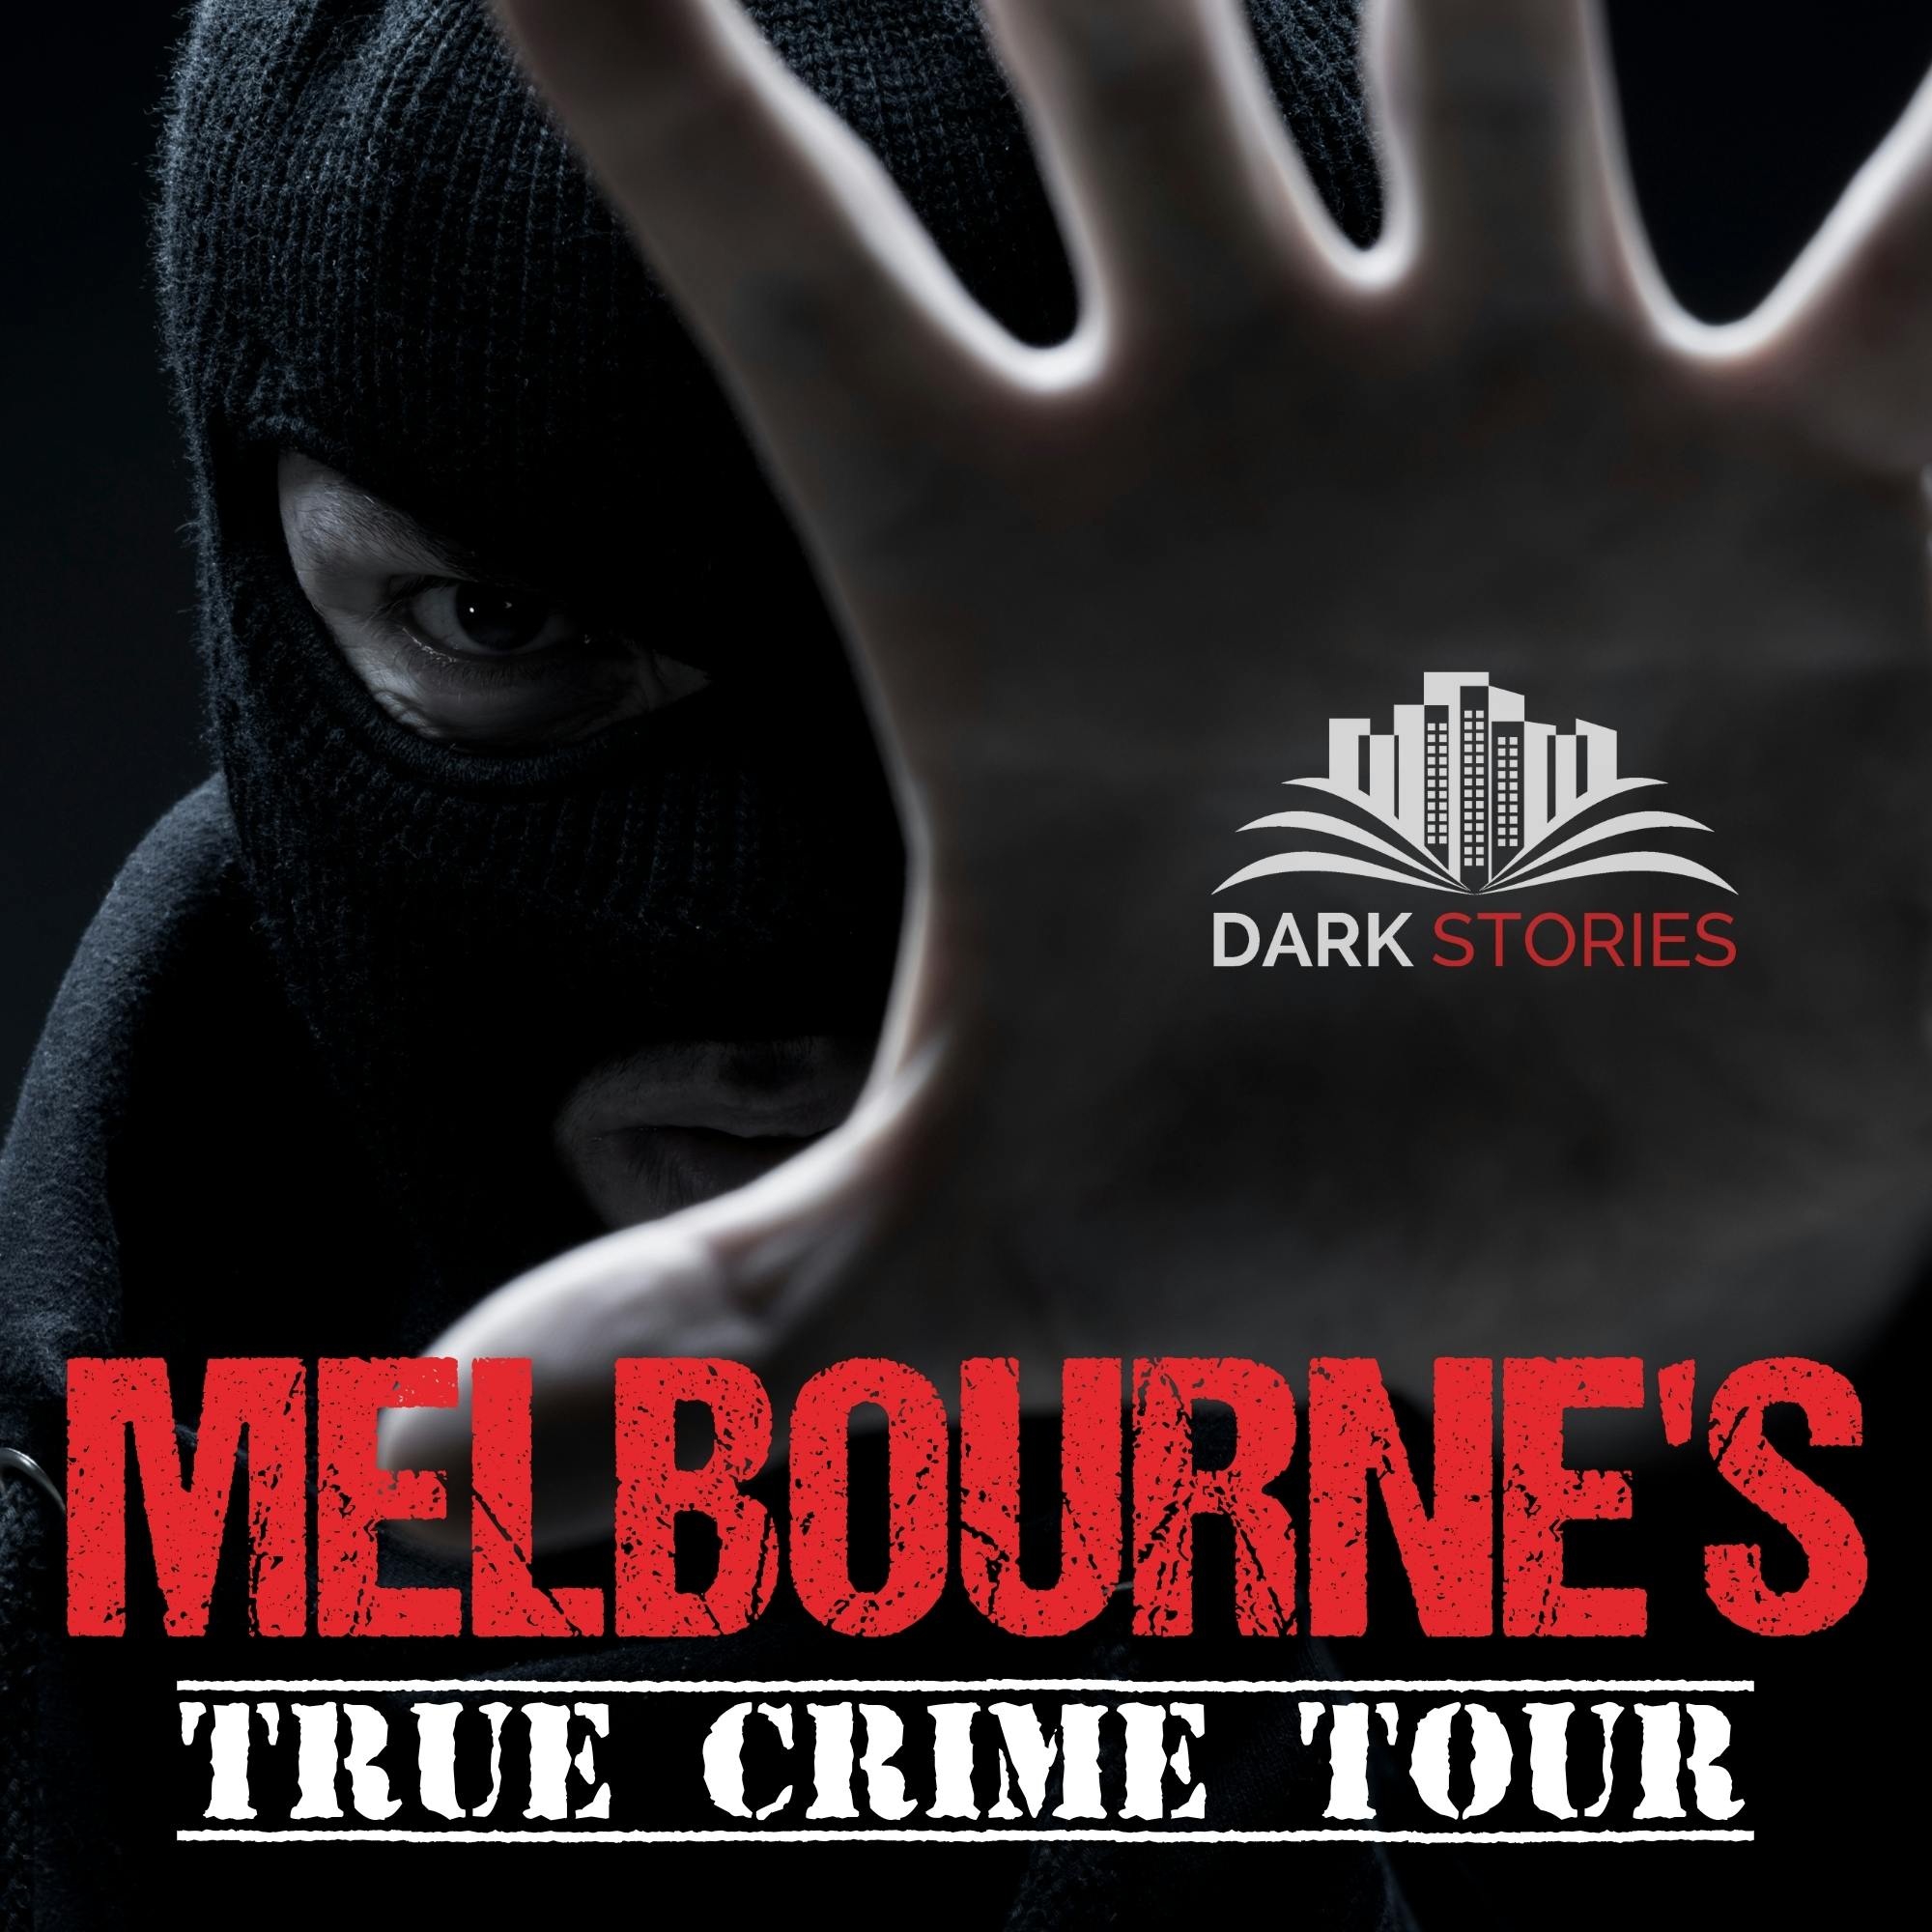 Melbourne's true crime tales guided tour